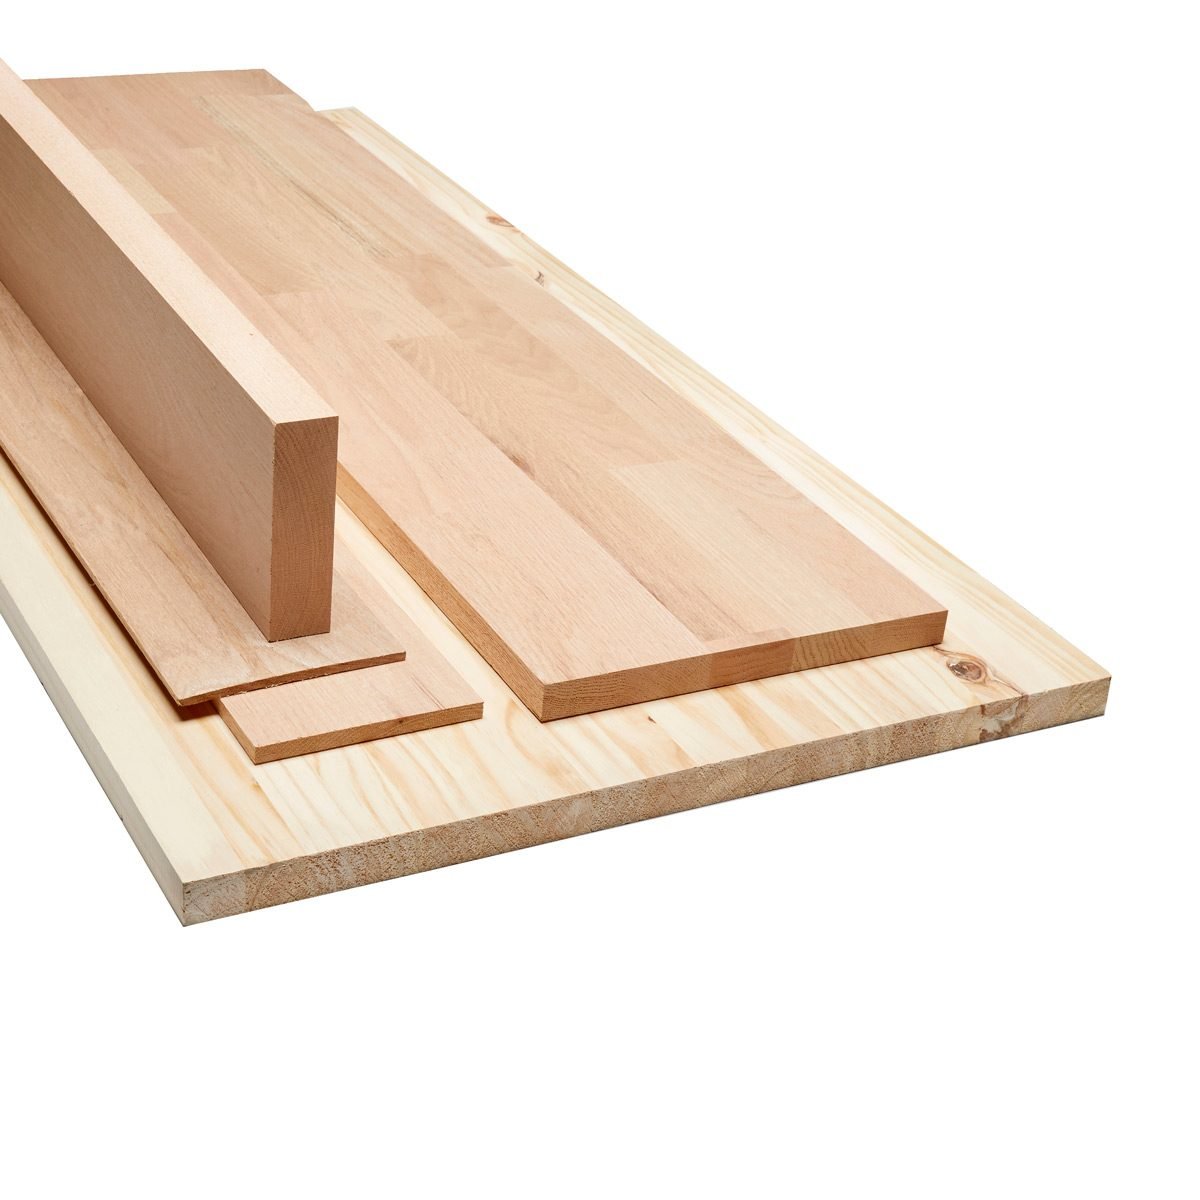 Beginners Guide to Buying Lumber - Houseful of Handmade